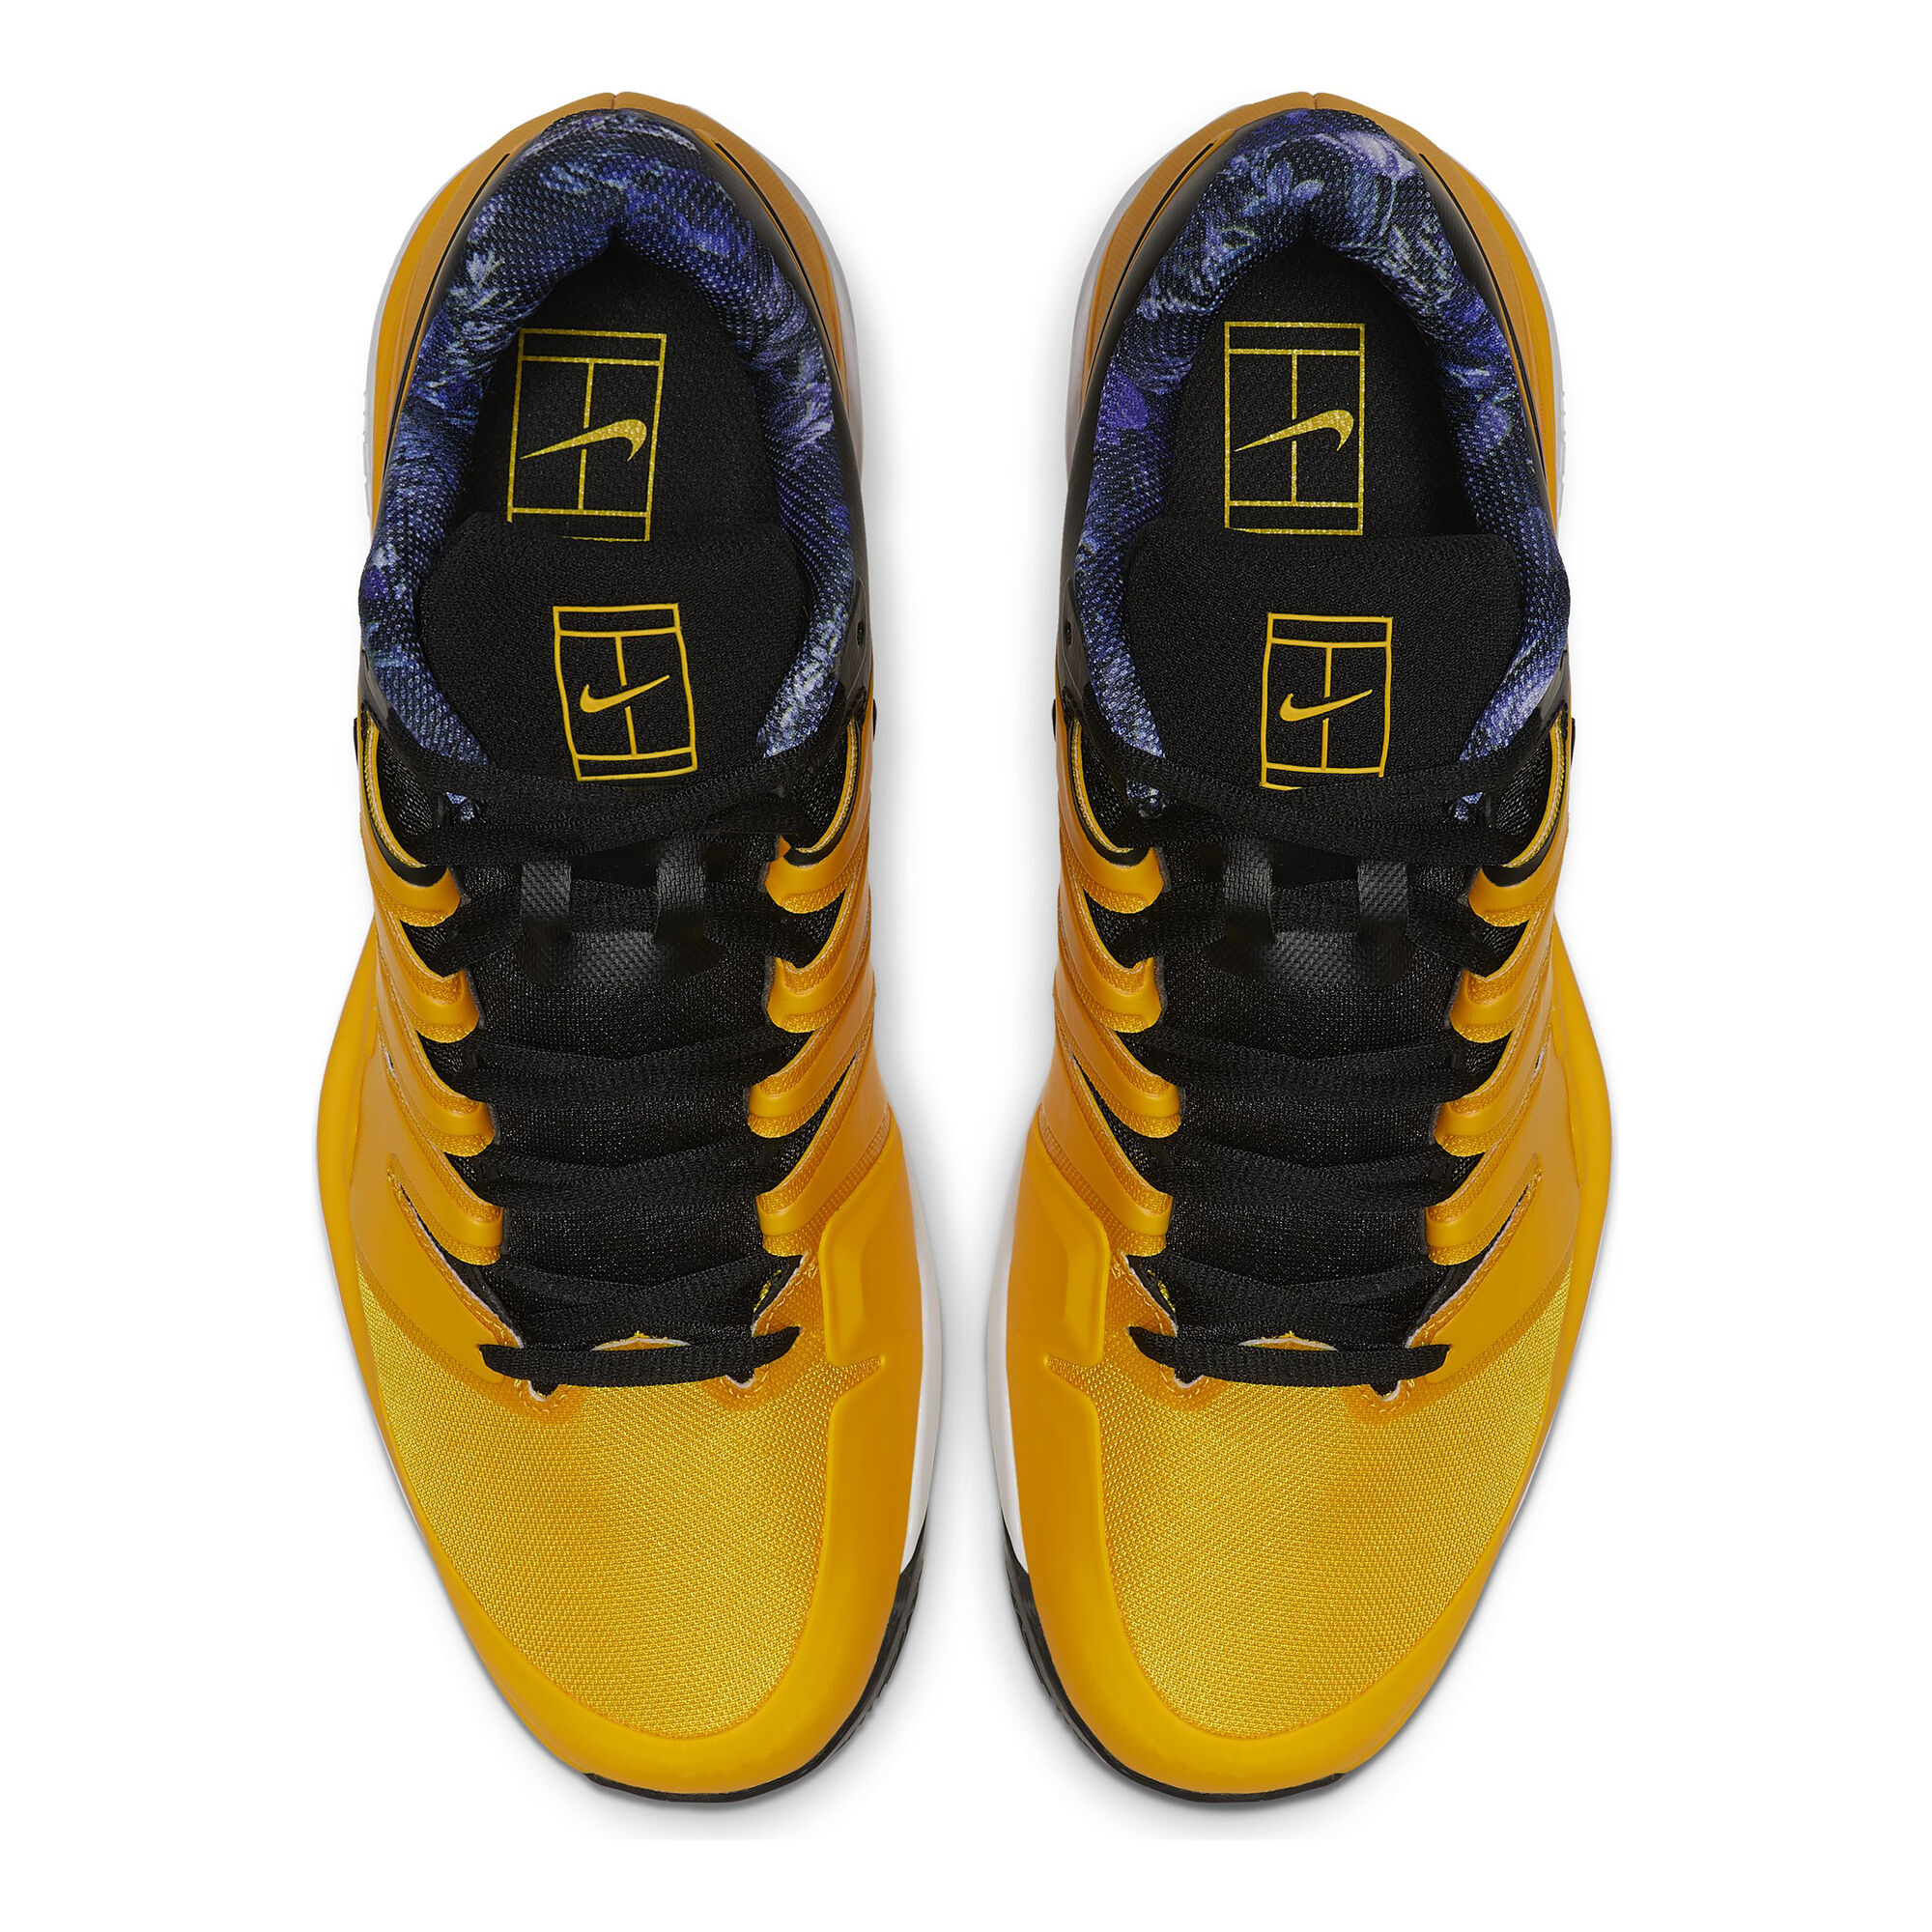 Buy Nike Air Zoom Vapor X Clay Court Shoe Men Golden Yellow, Black ...